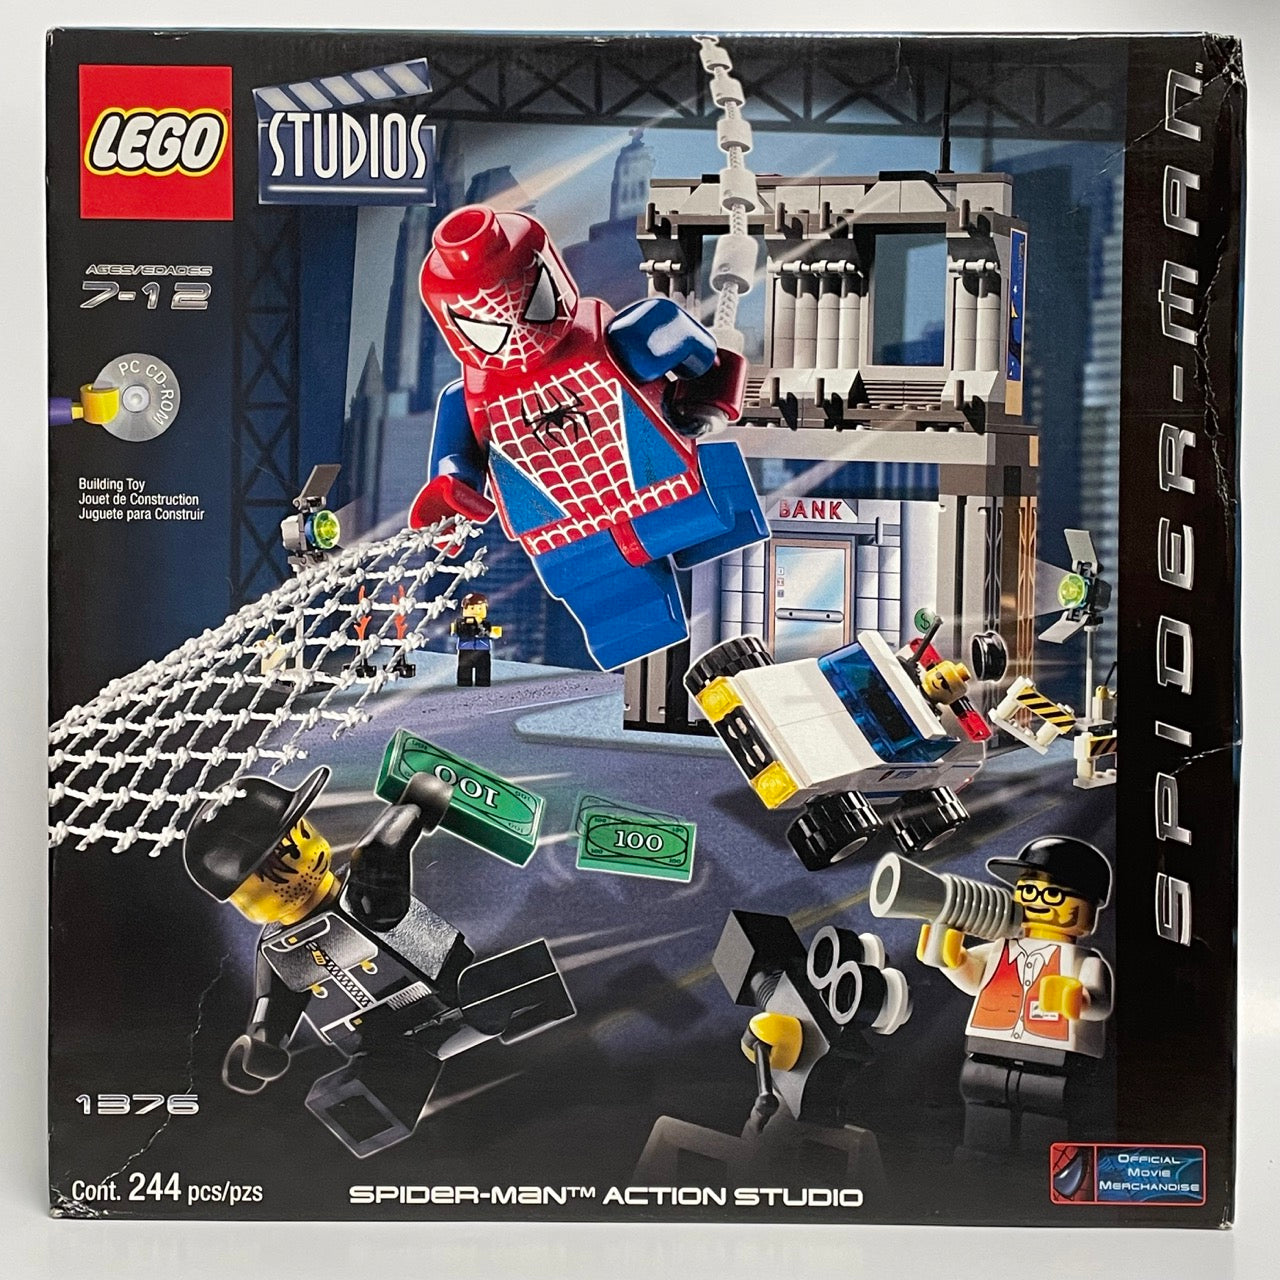 At læse Streng ozon Spider-Man Action Studio LEGO 1376 [Retired] NIB 2002 – Bricks and Minifigs  Huntsville AL